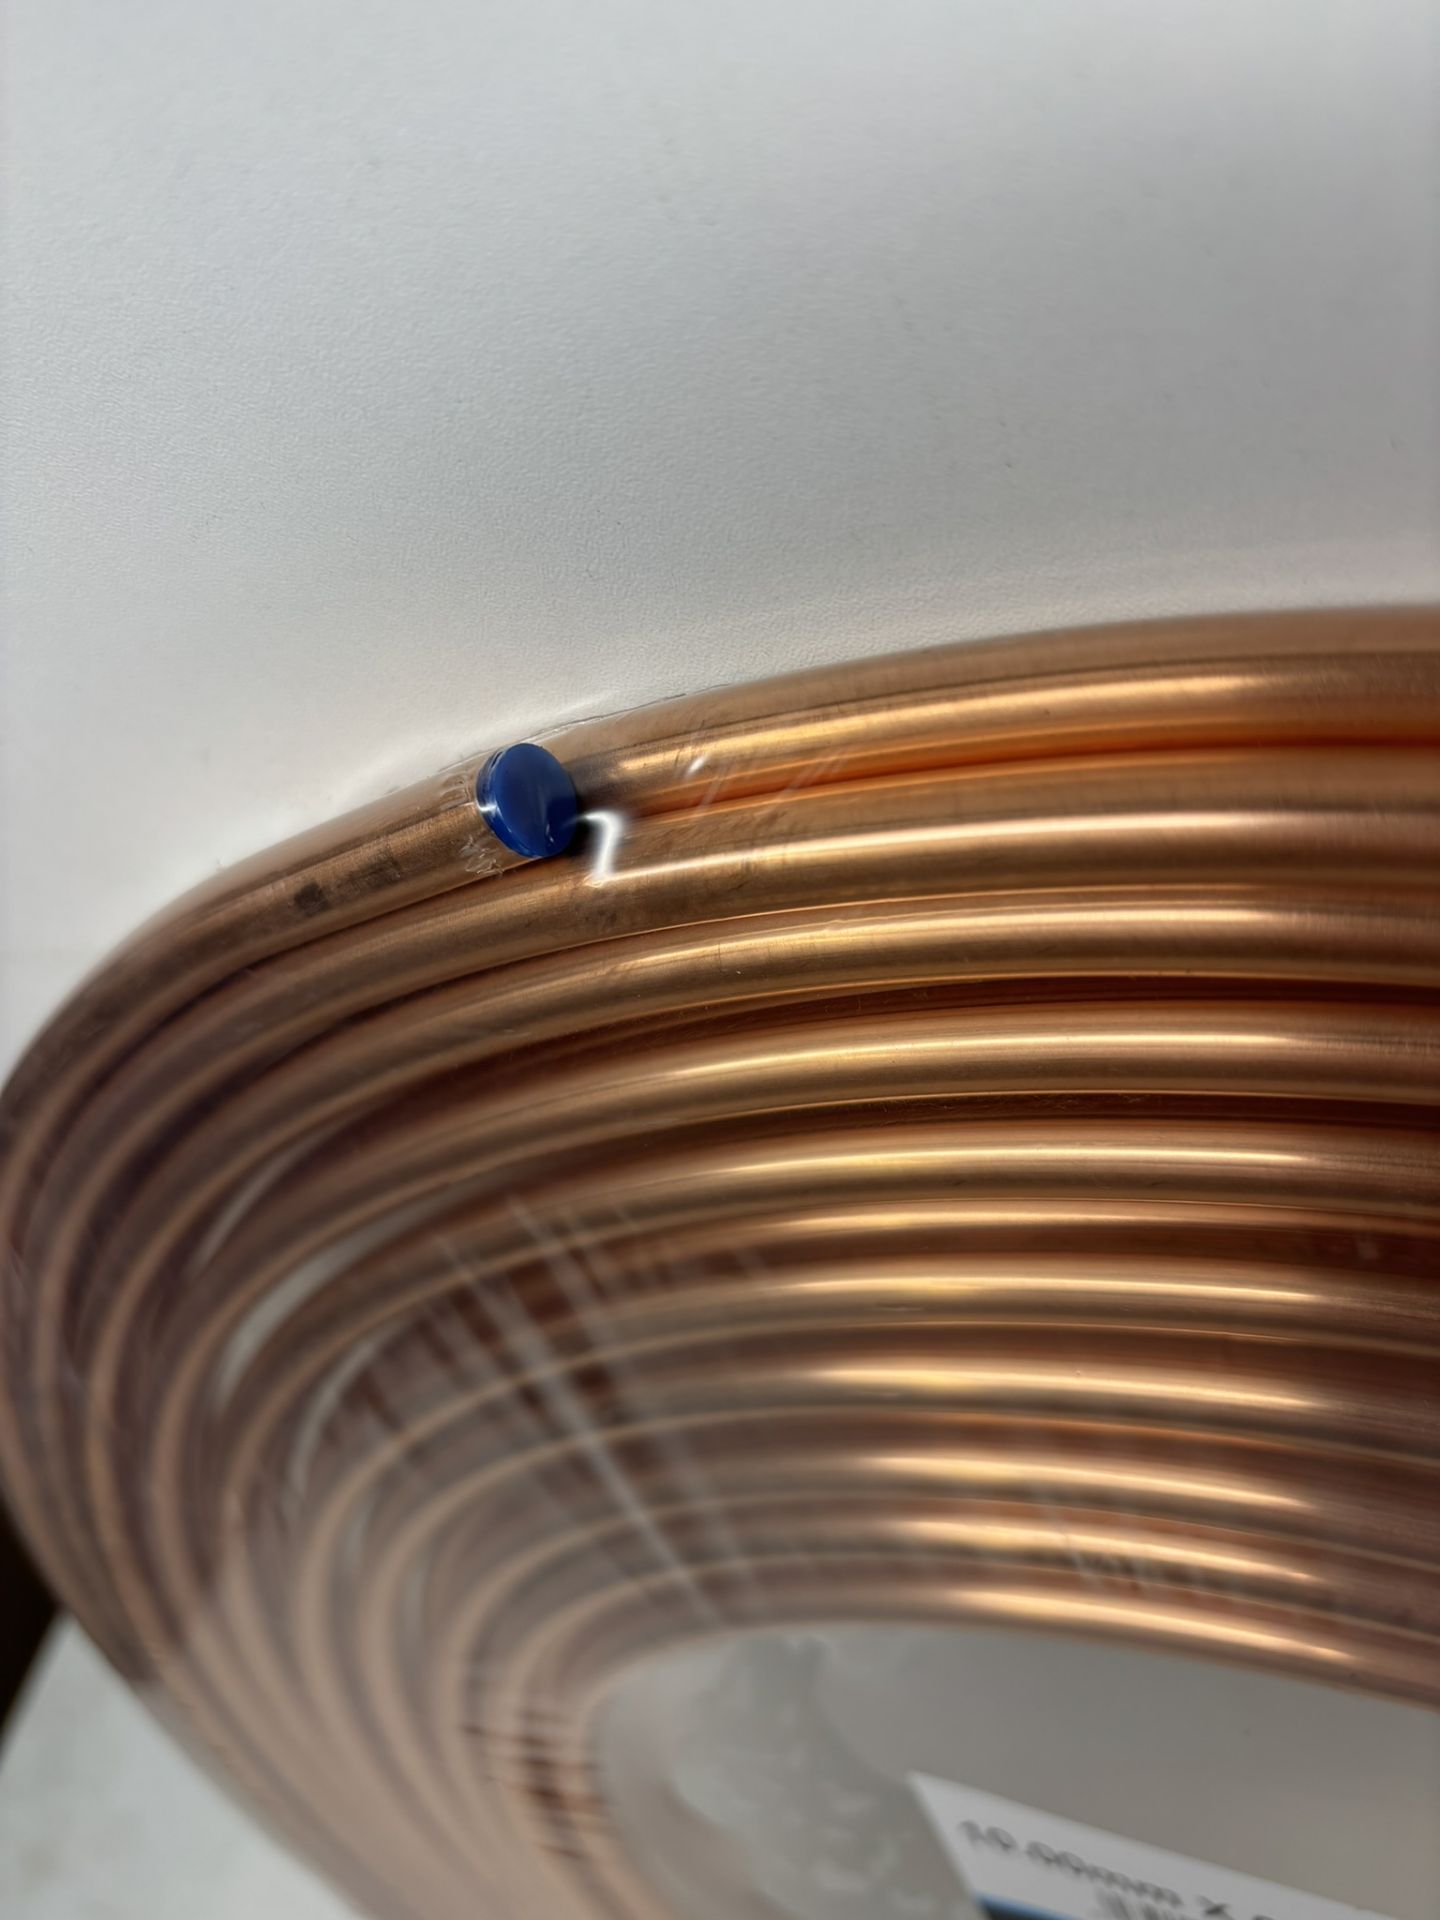 3 x Lawton 10.00mm x 0.70mm x 25Mtr Copper Plumbing Tube Coils - Image 4 of 9